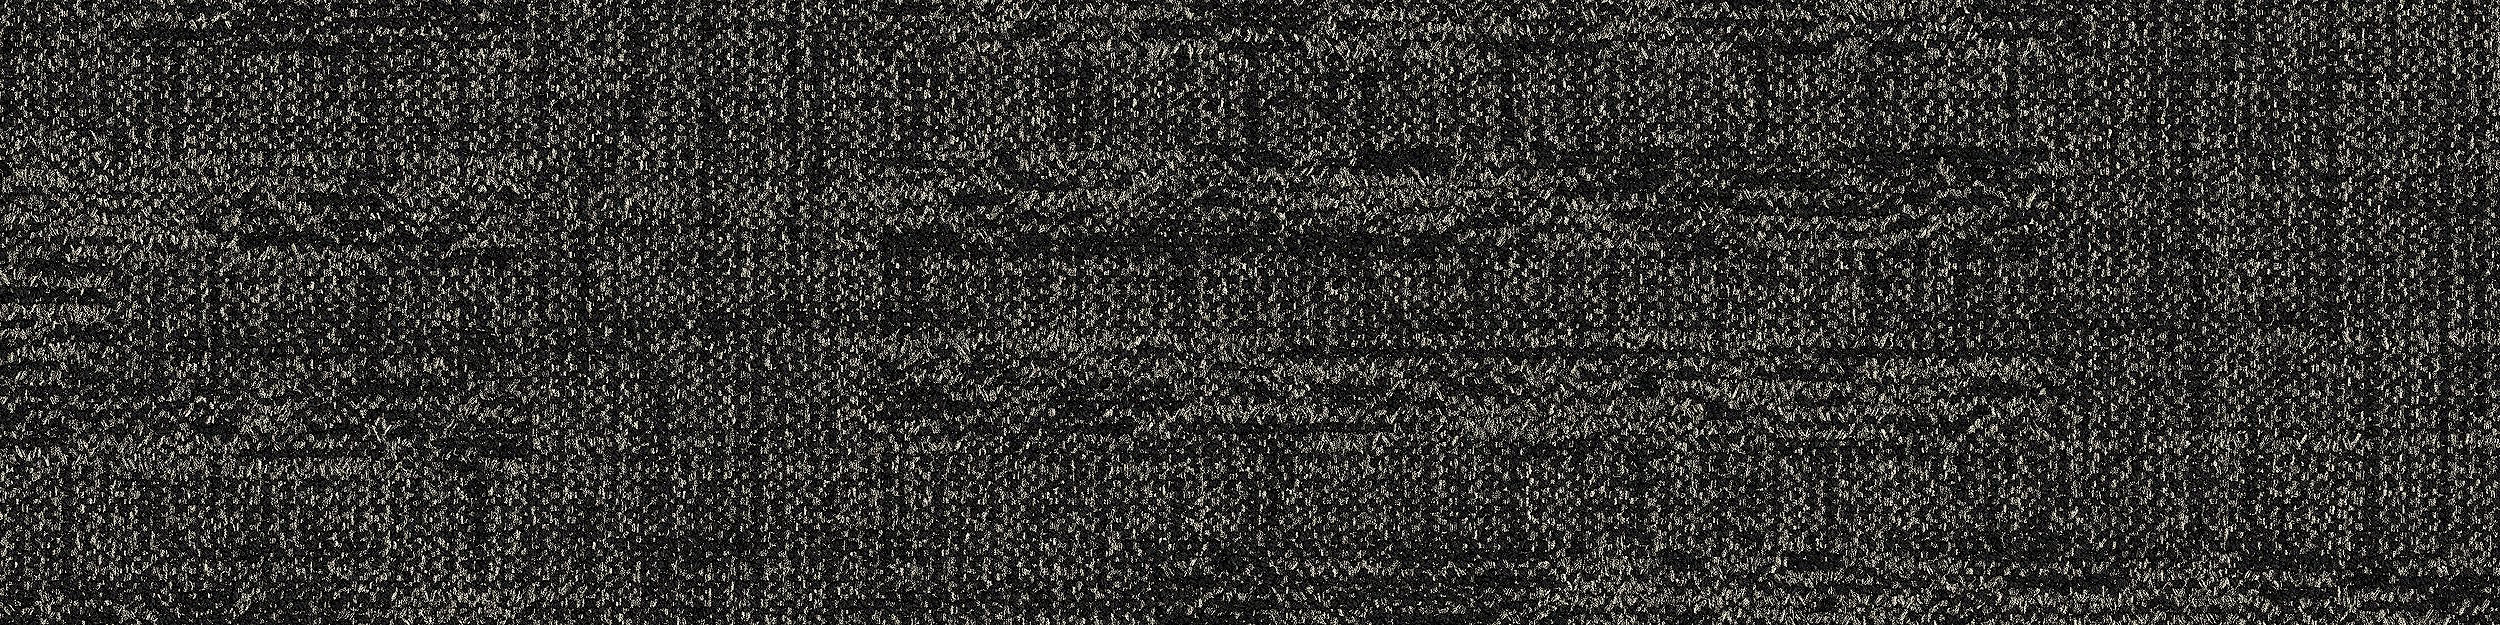 DL909 Carpet Tile In Flint imagen número 3